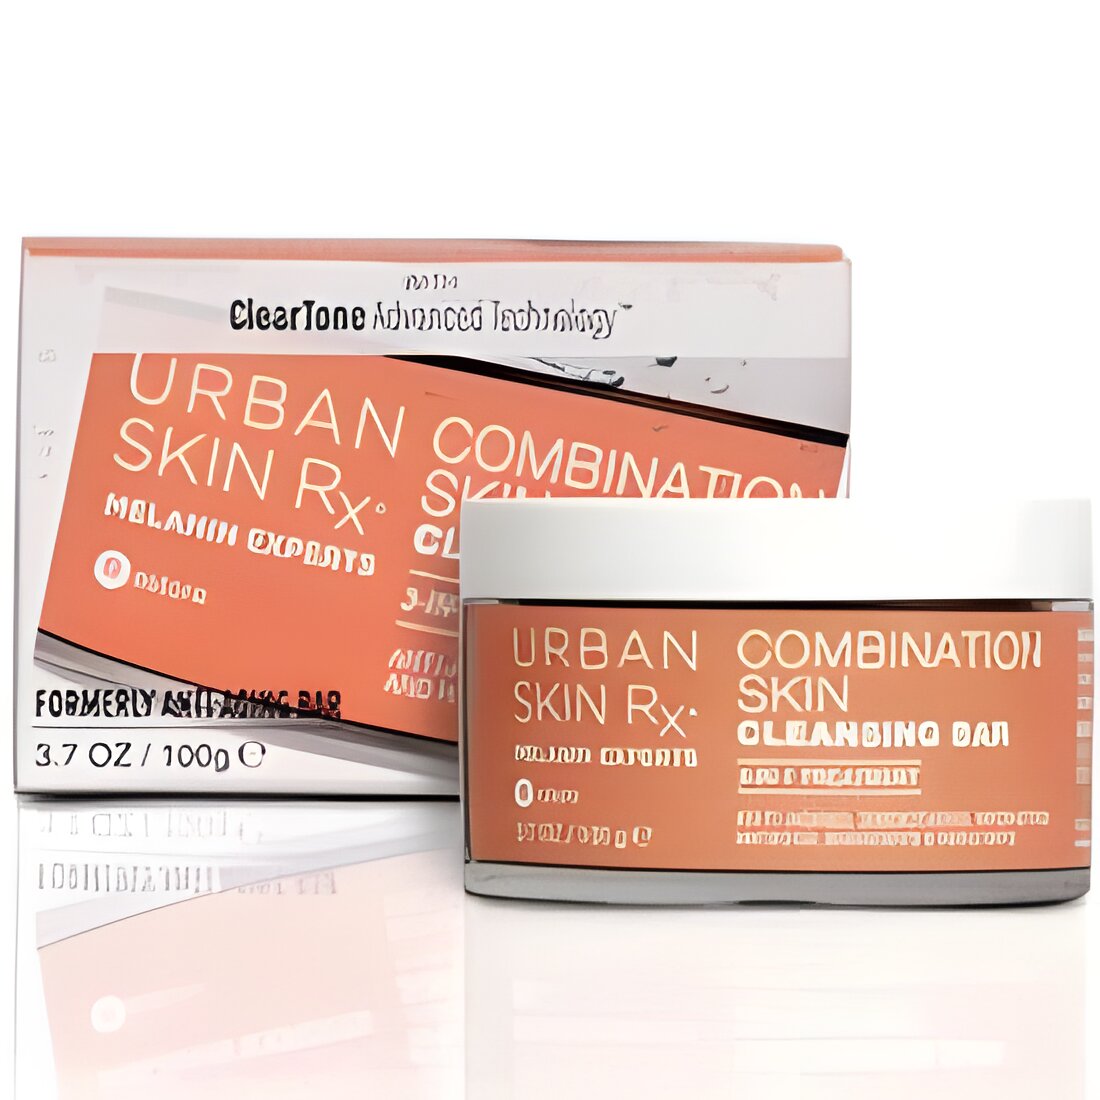 Free Urban Skin RX Combination Skin Cleansing Bar